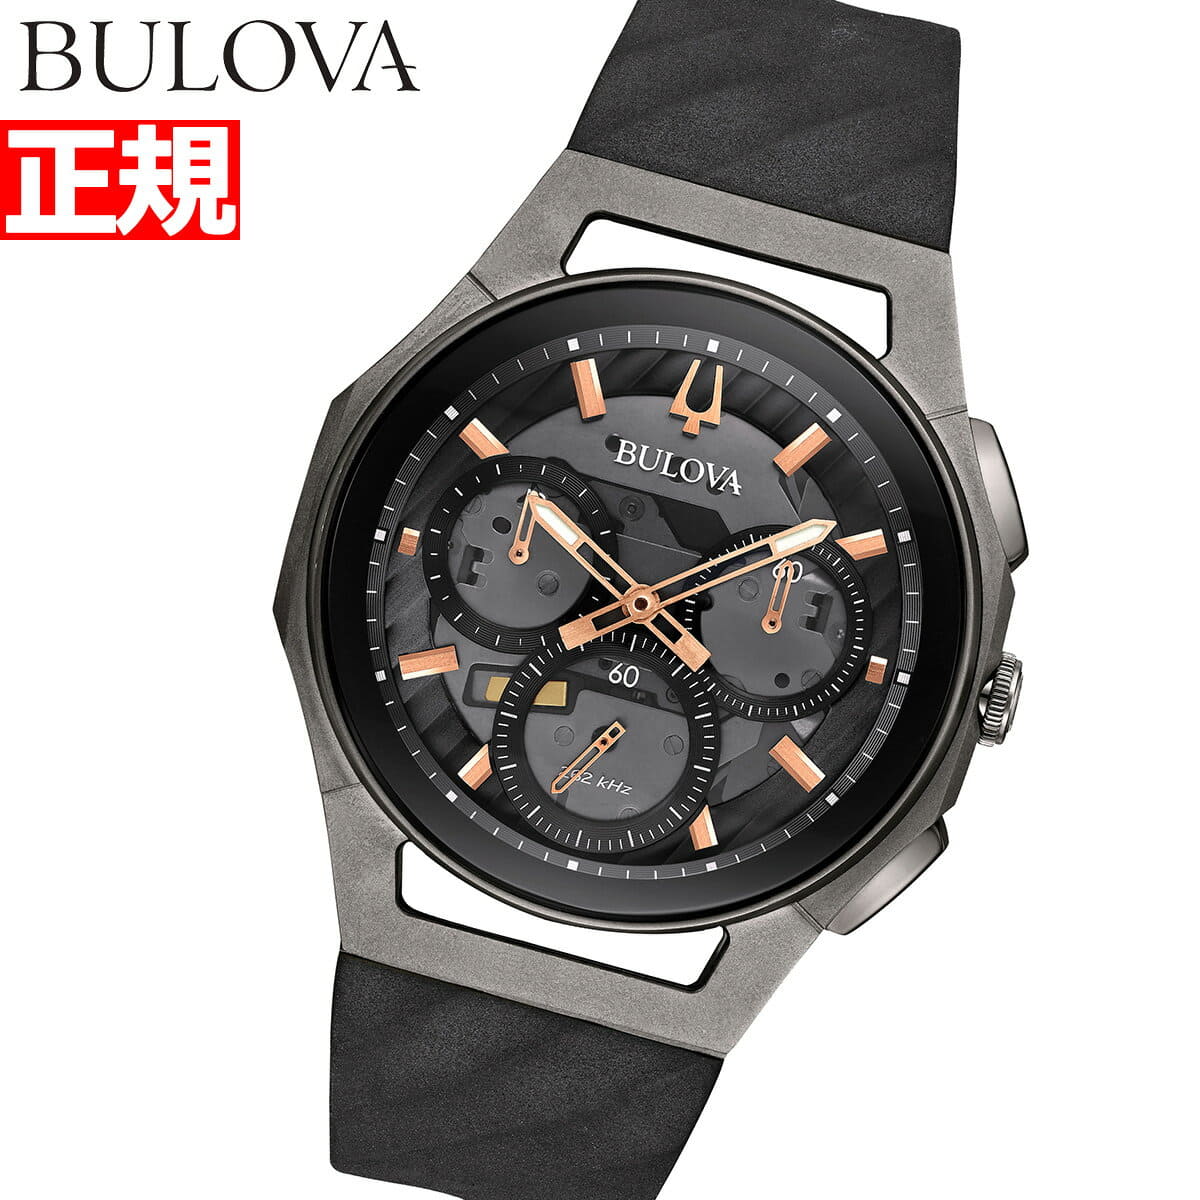 New]Bulova BULOVA watch men curve CURV chronograph 98A162 - BE FORWARD Store